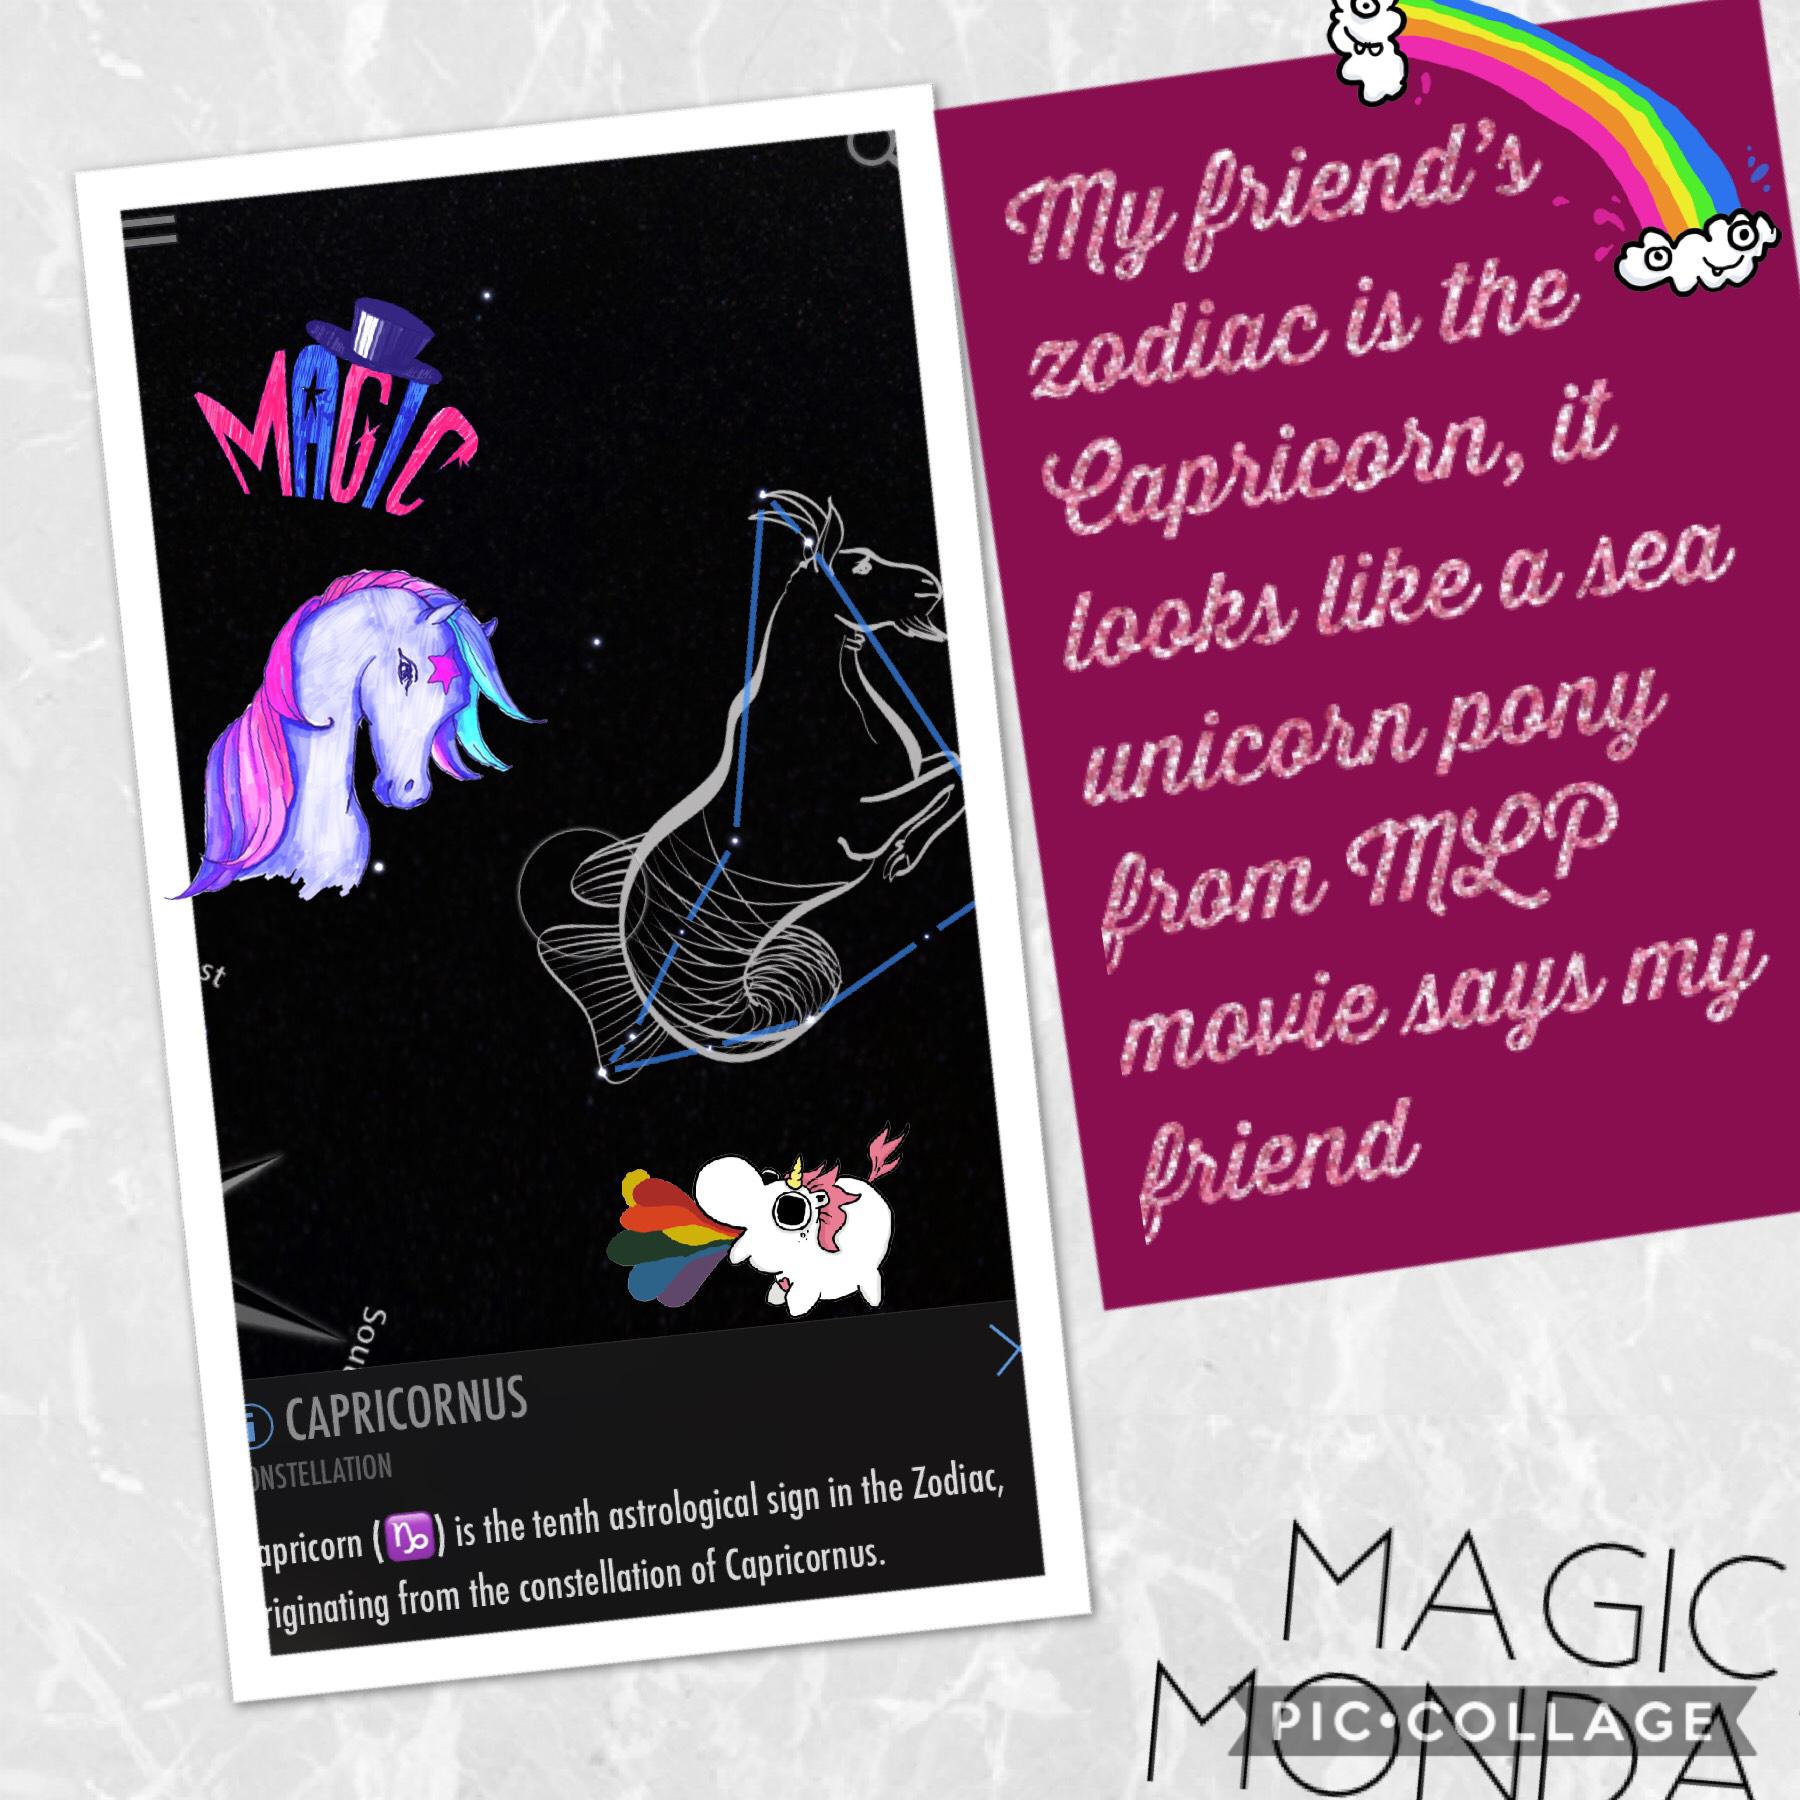 My Friend’s Zodiac is the Capricorn and she loves unicorns!! 🦄